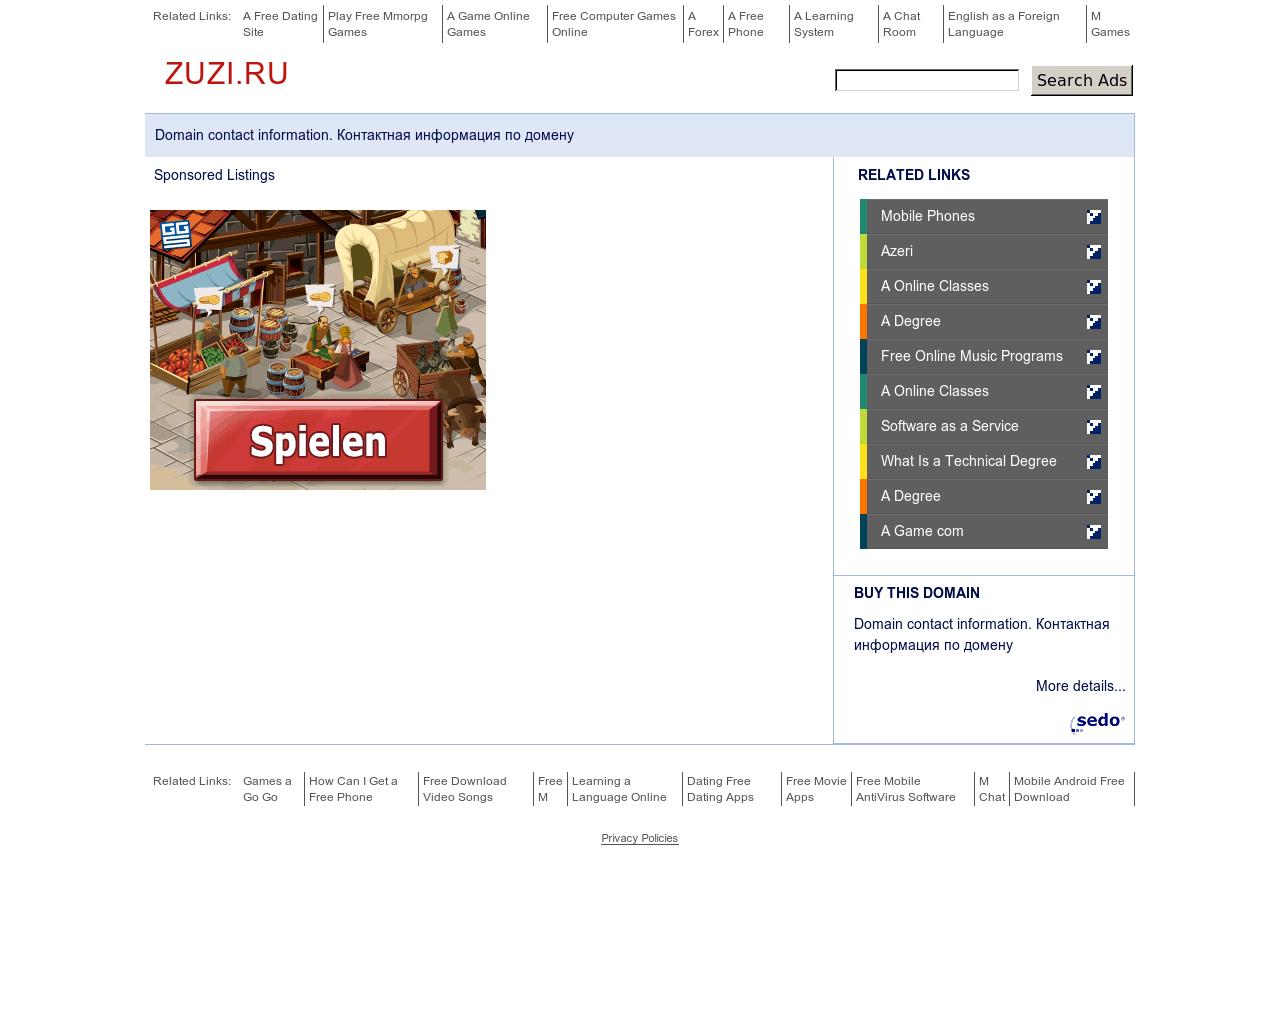 Изображение сайта zuzi.ru в разрешении 1280x1024